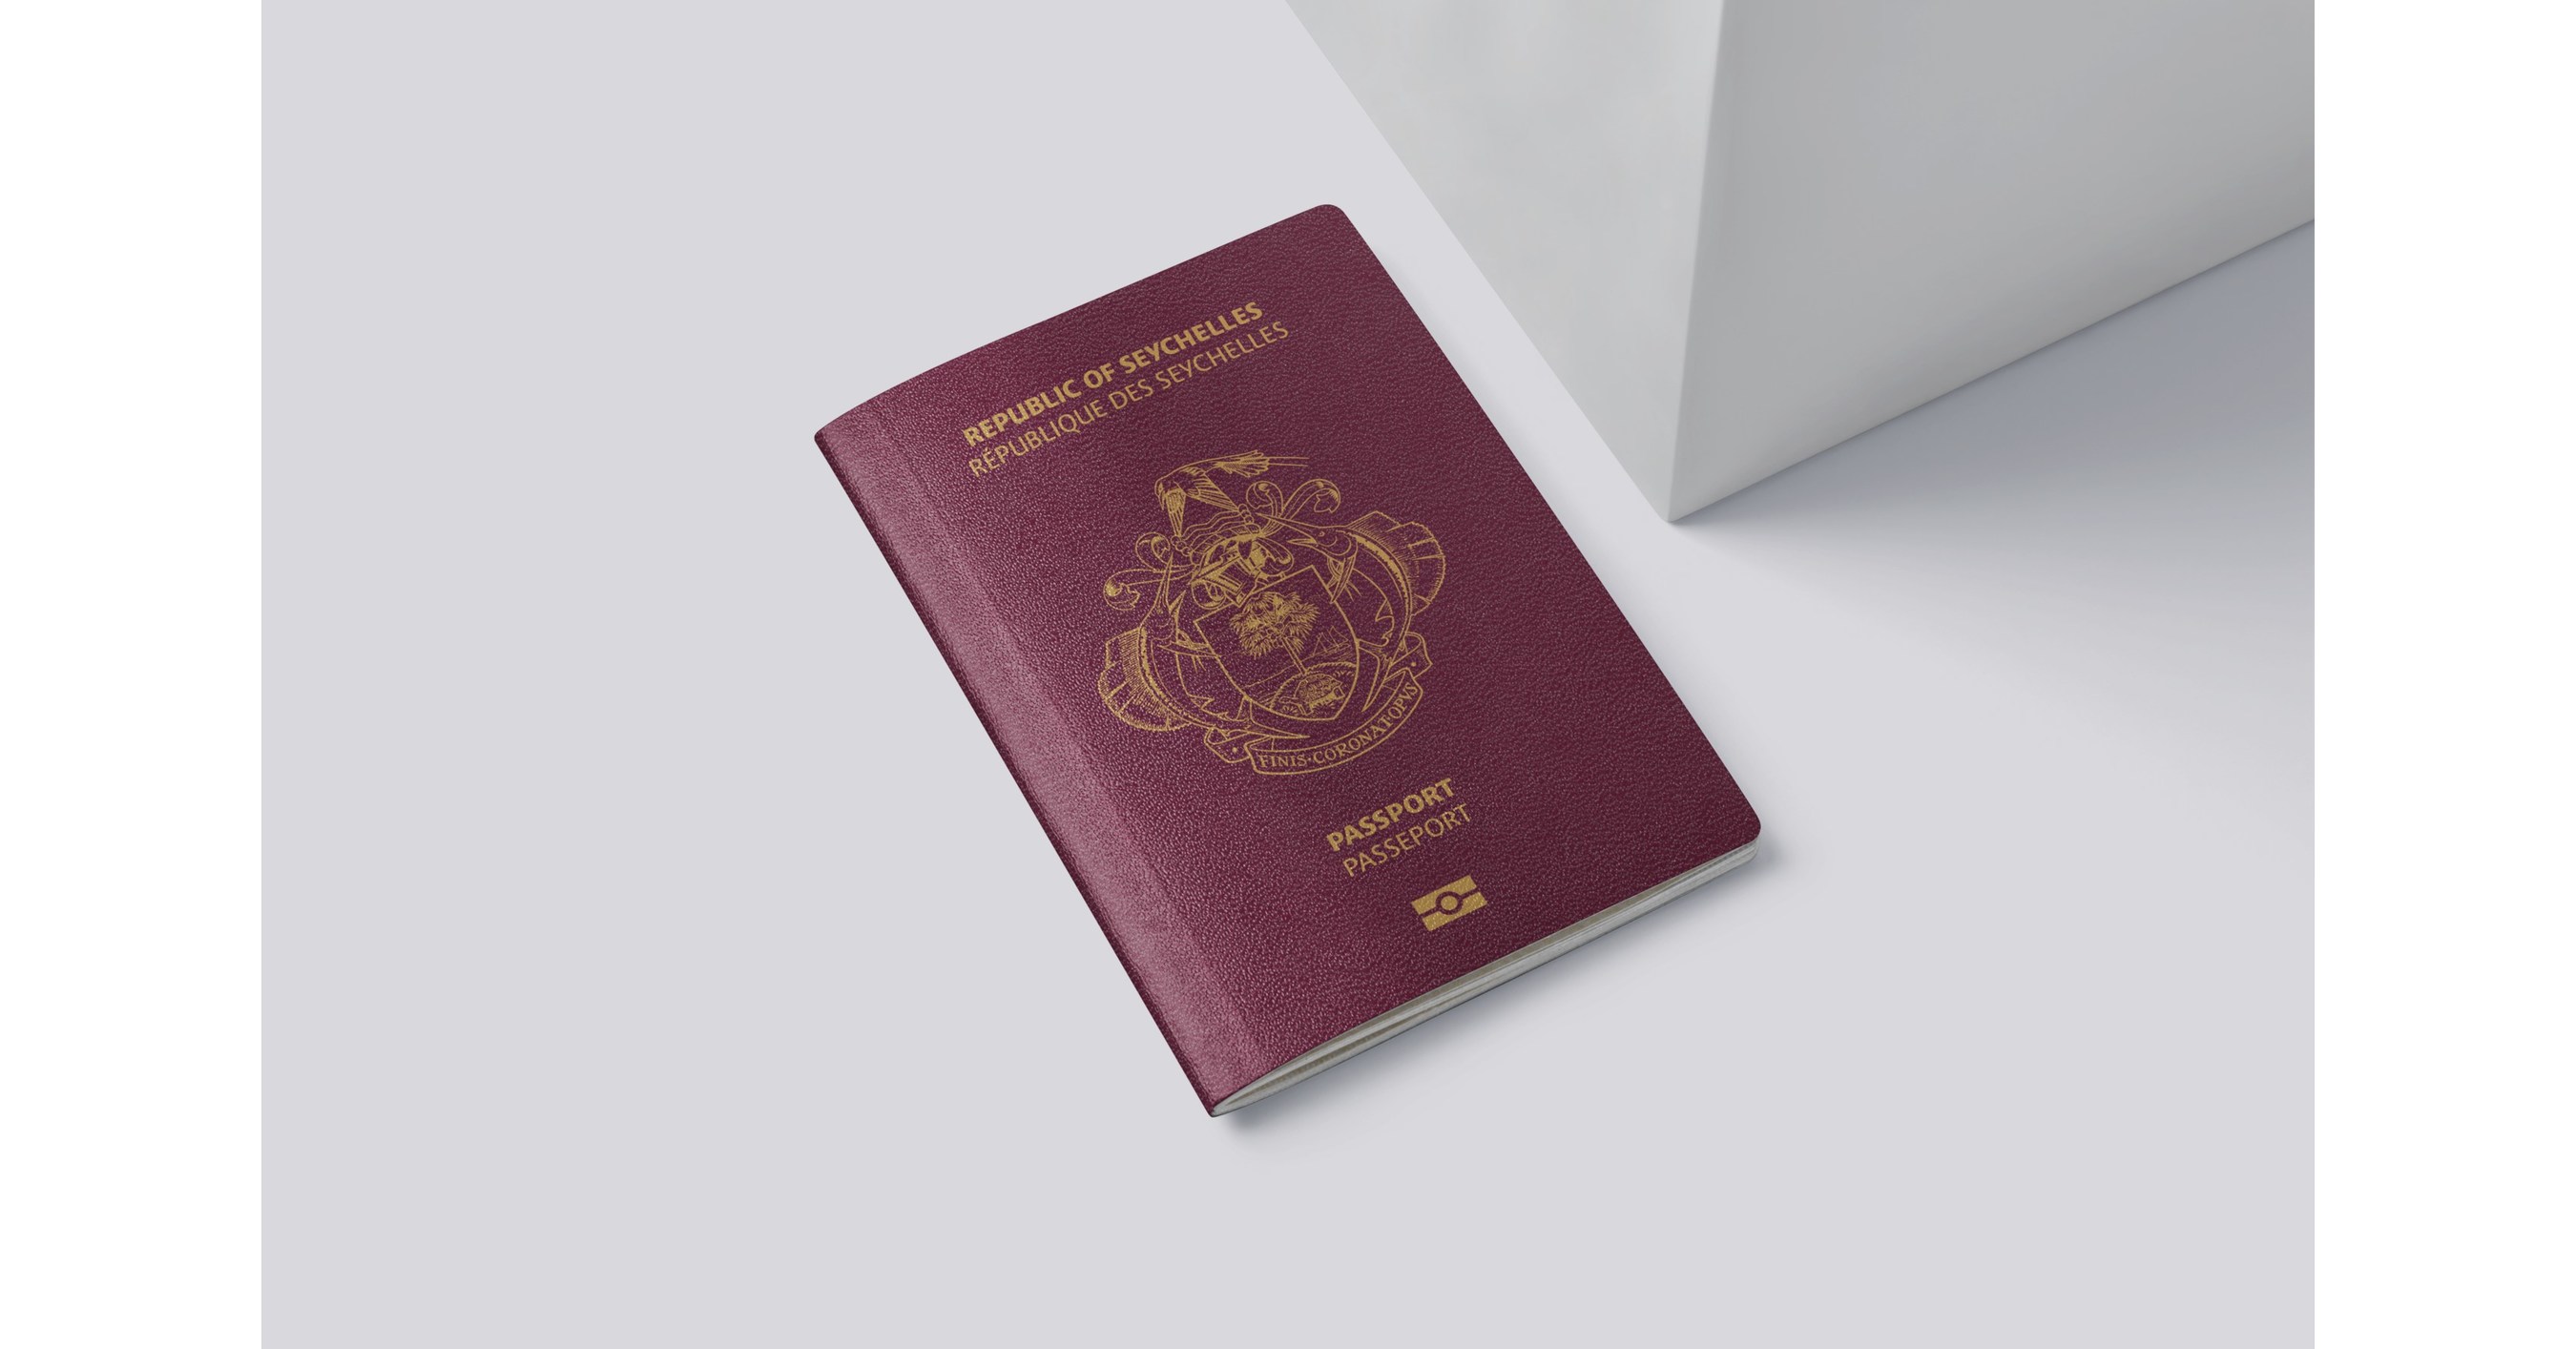 IN Groupe unveils Seychelles' new biometric passport